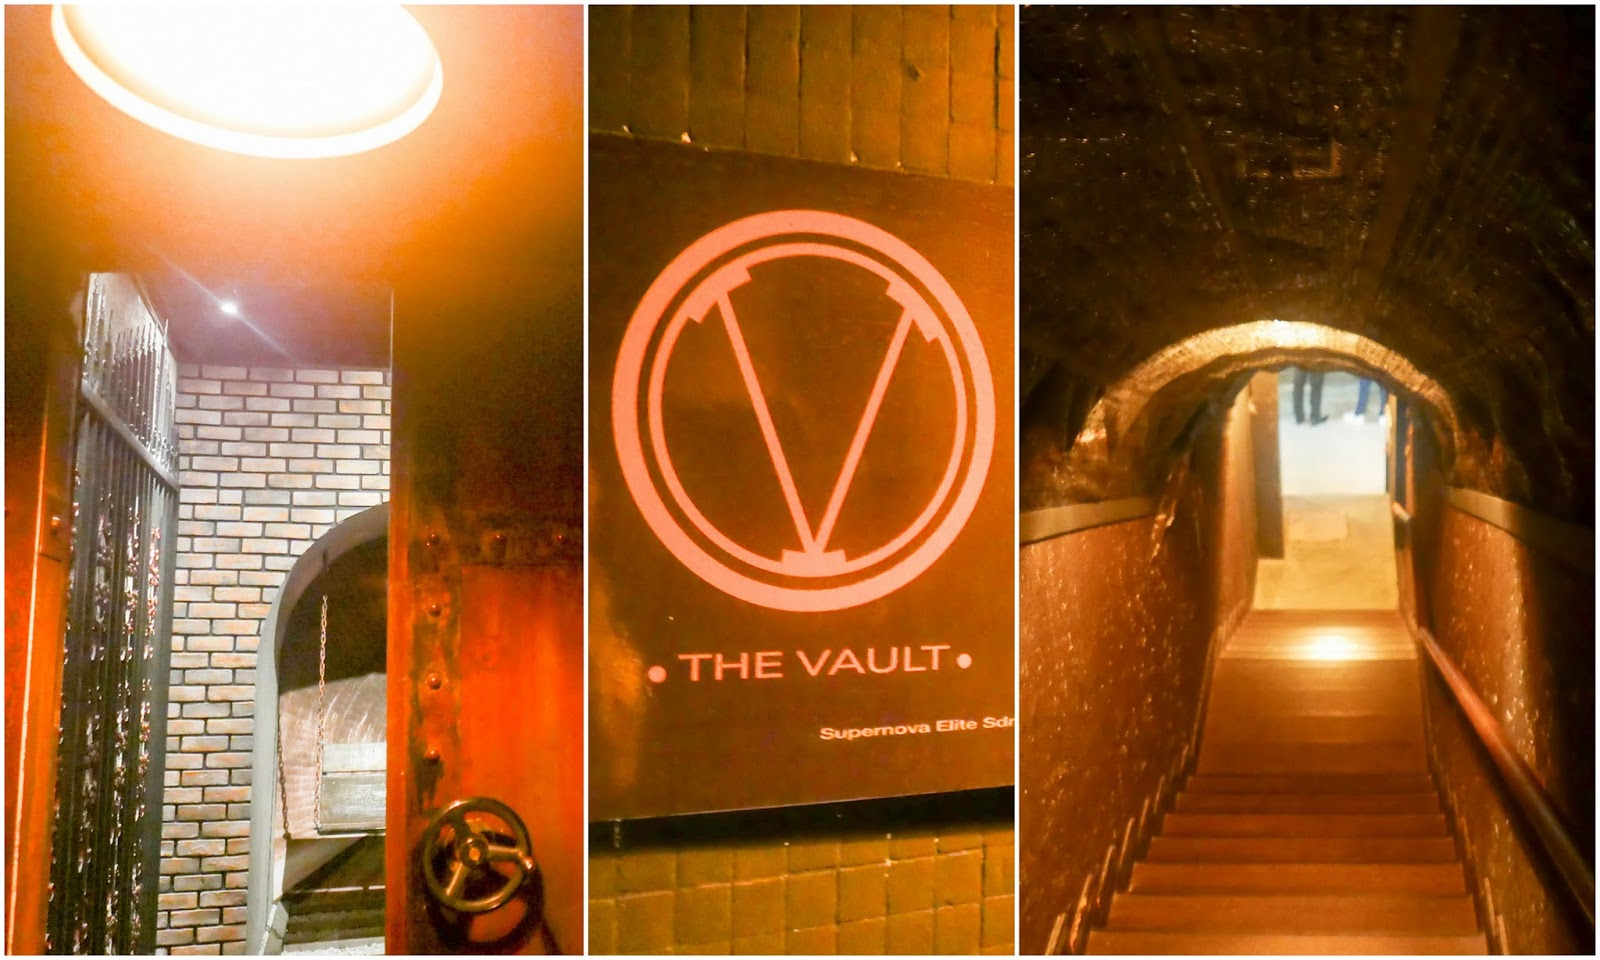 6. The Vault